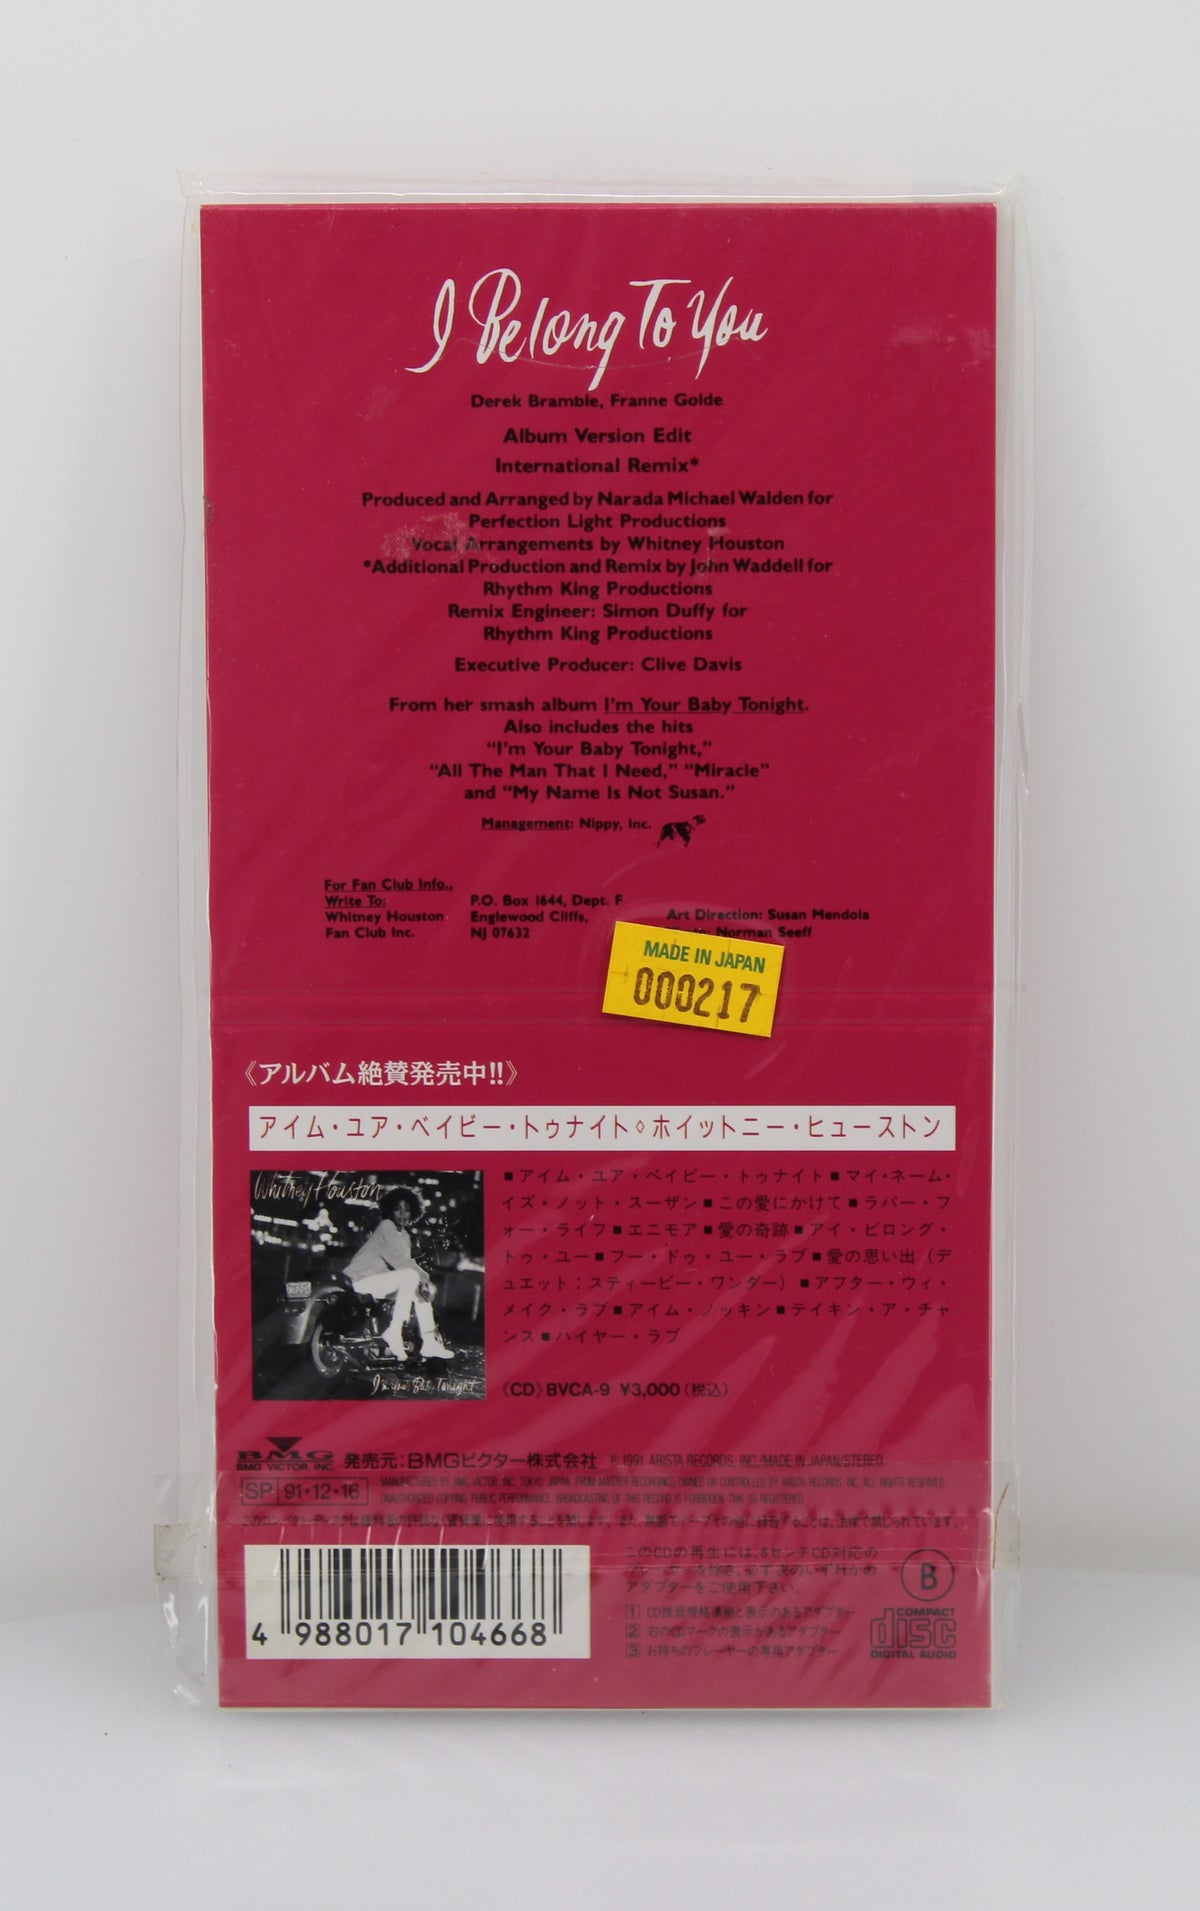 Whitney Houston – I Belong To You, CD, Mini, Single, Japan 1991